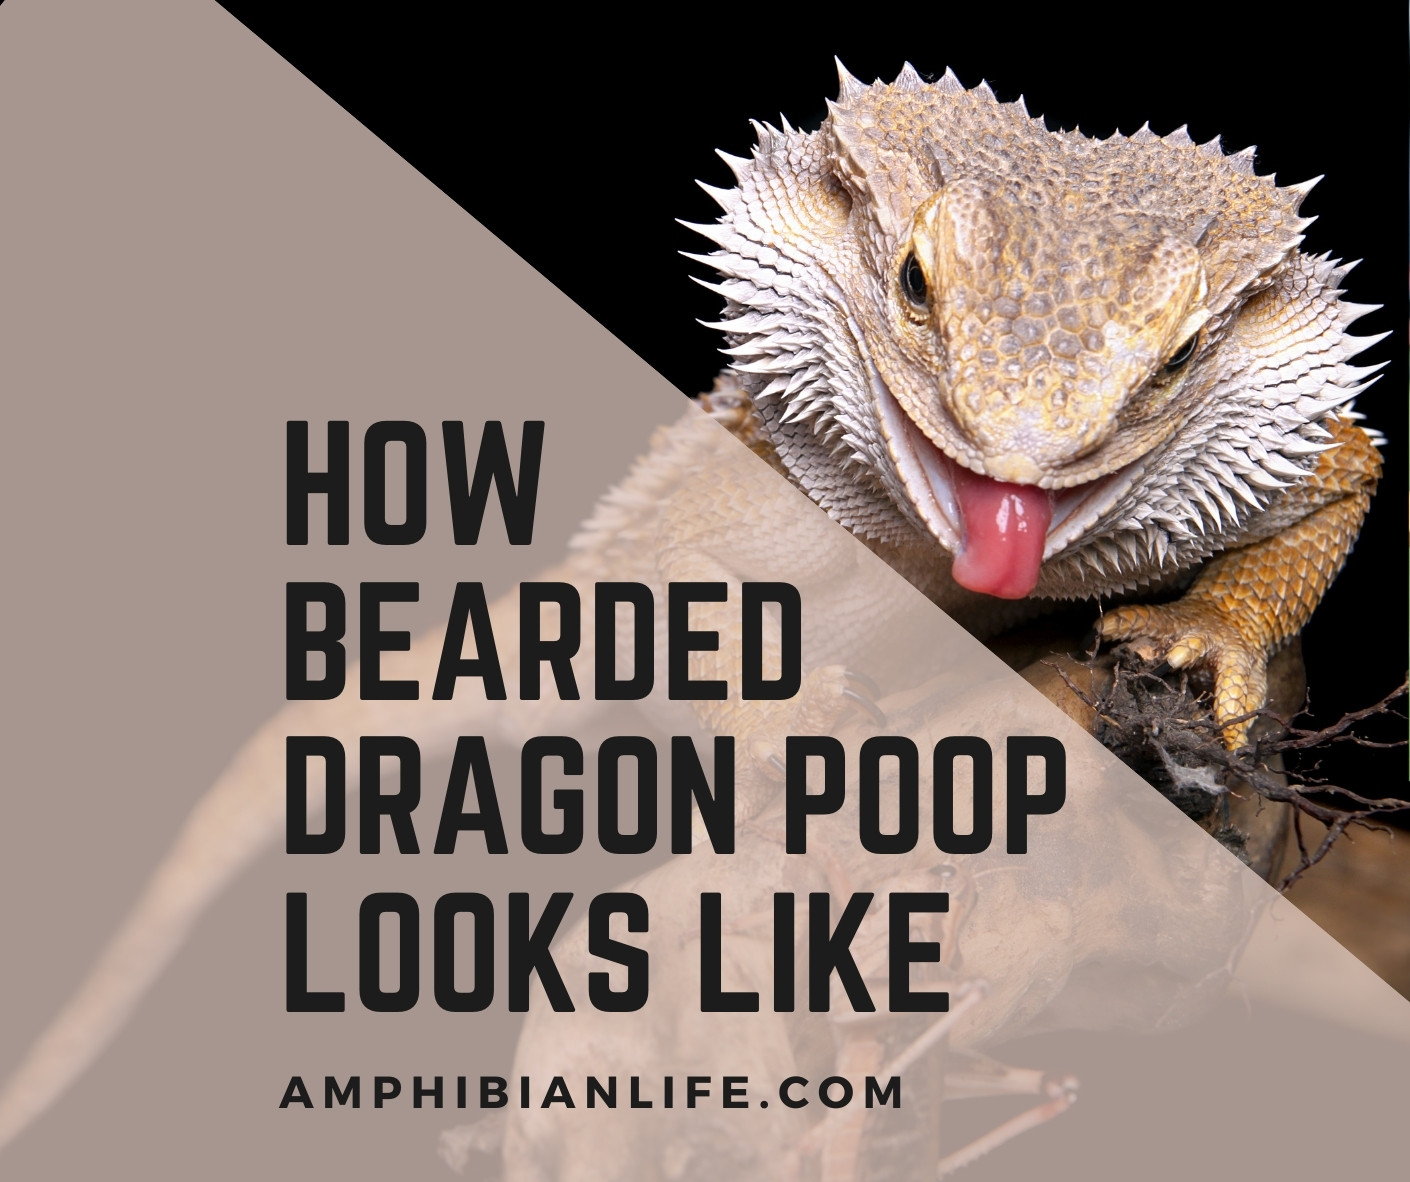 How bearded dragon poop looks like